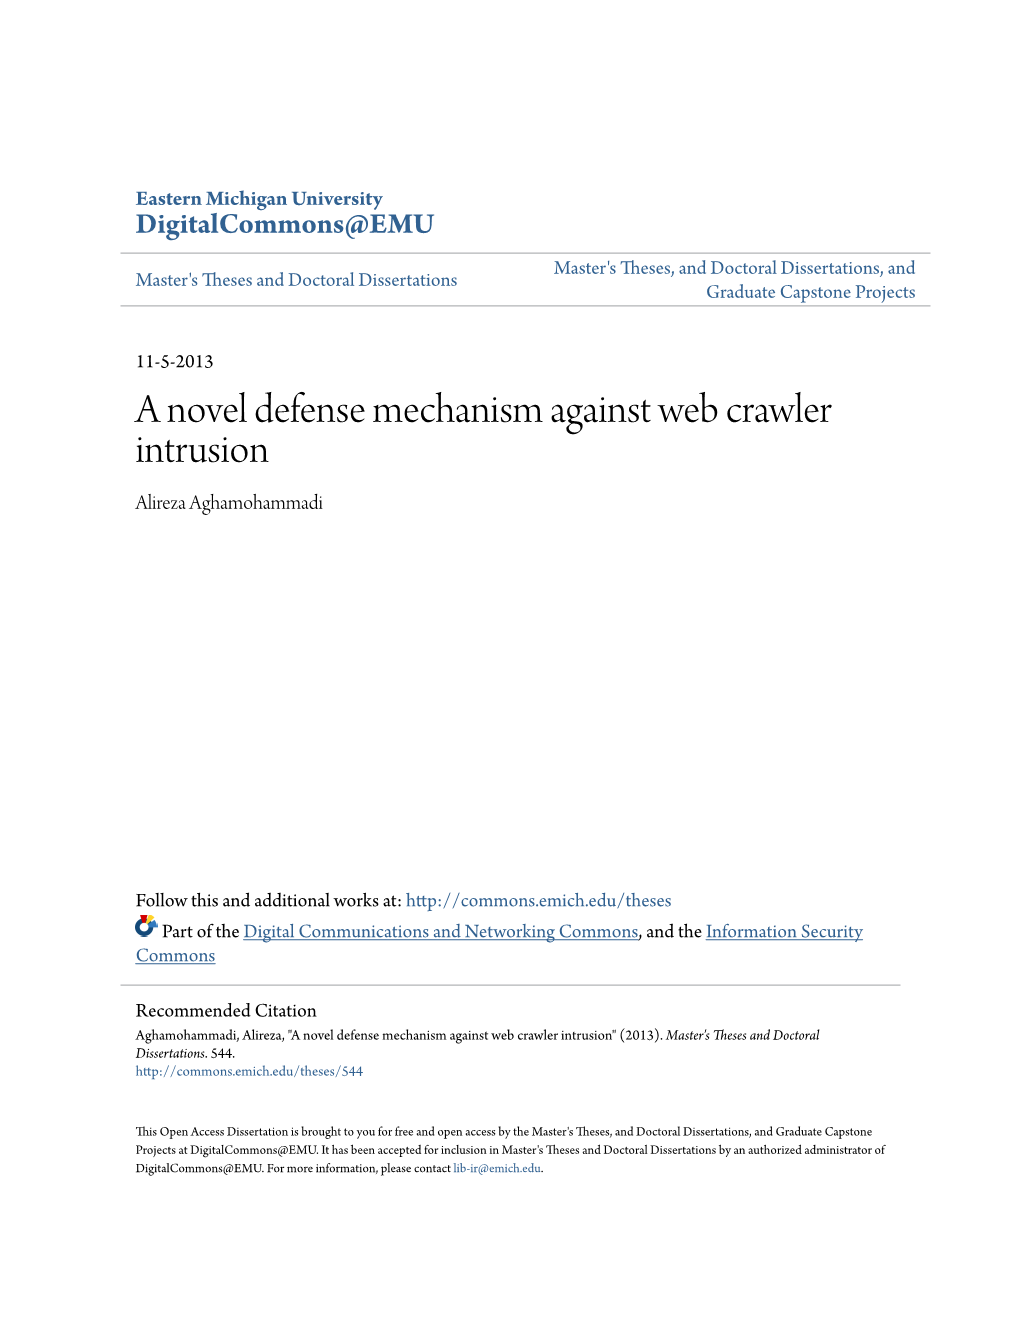 A Novel Defense Mechanism Against Web Crawler Intrusion Alireza Aghamohammadi